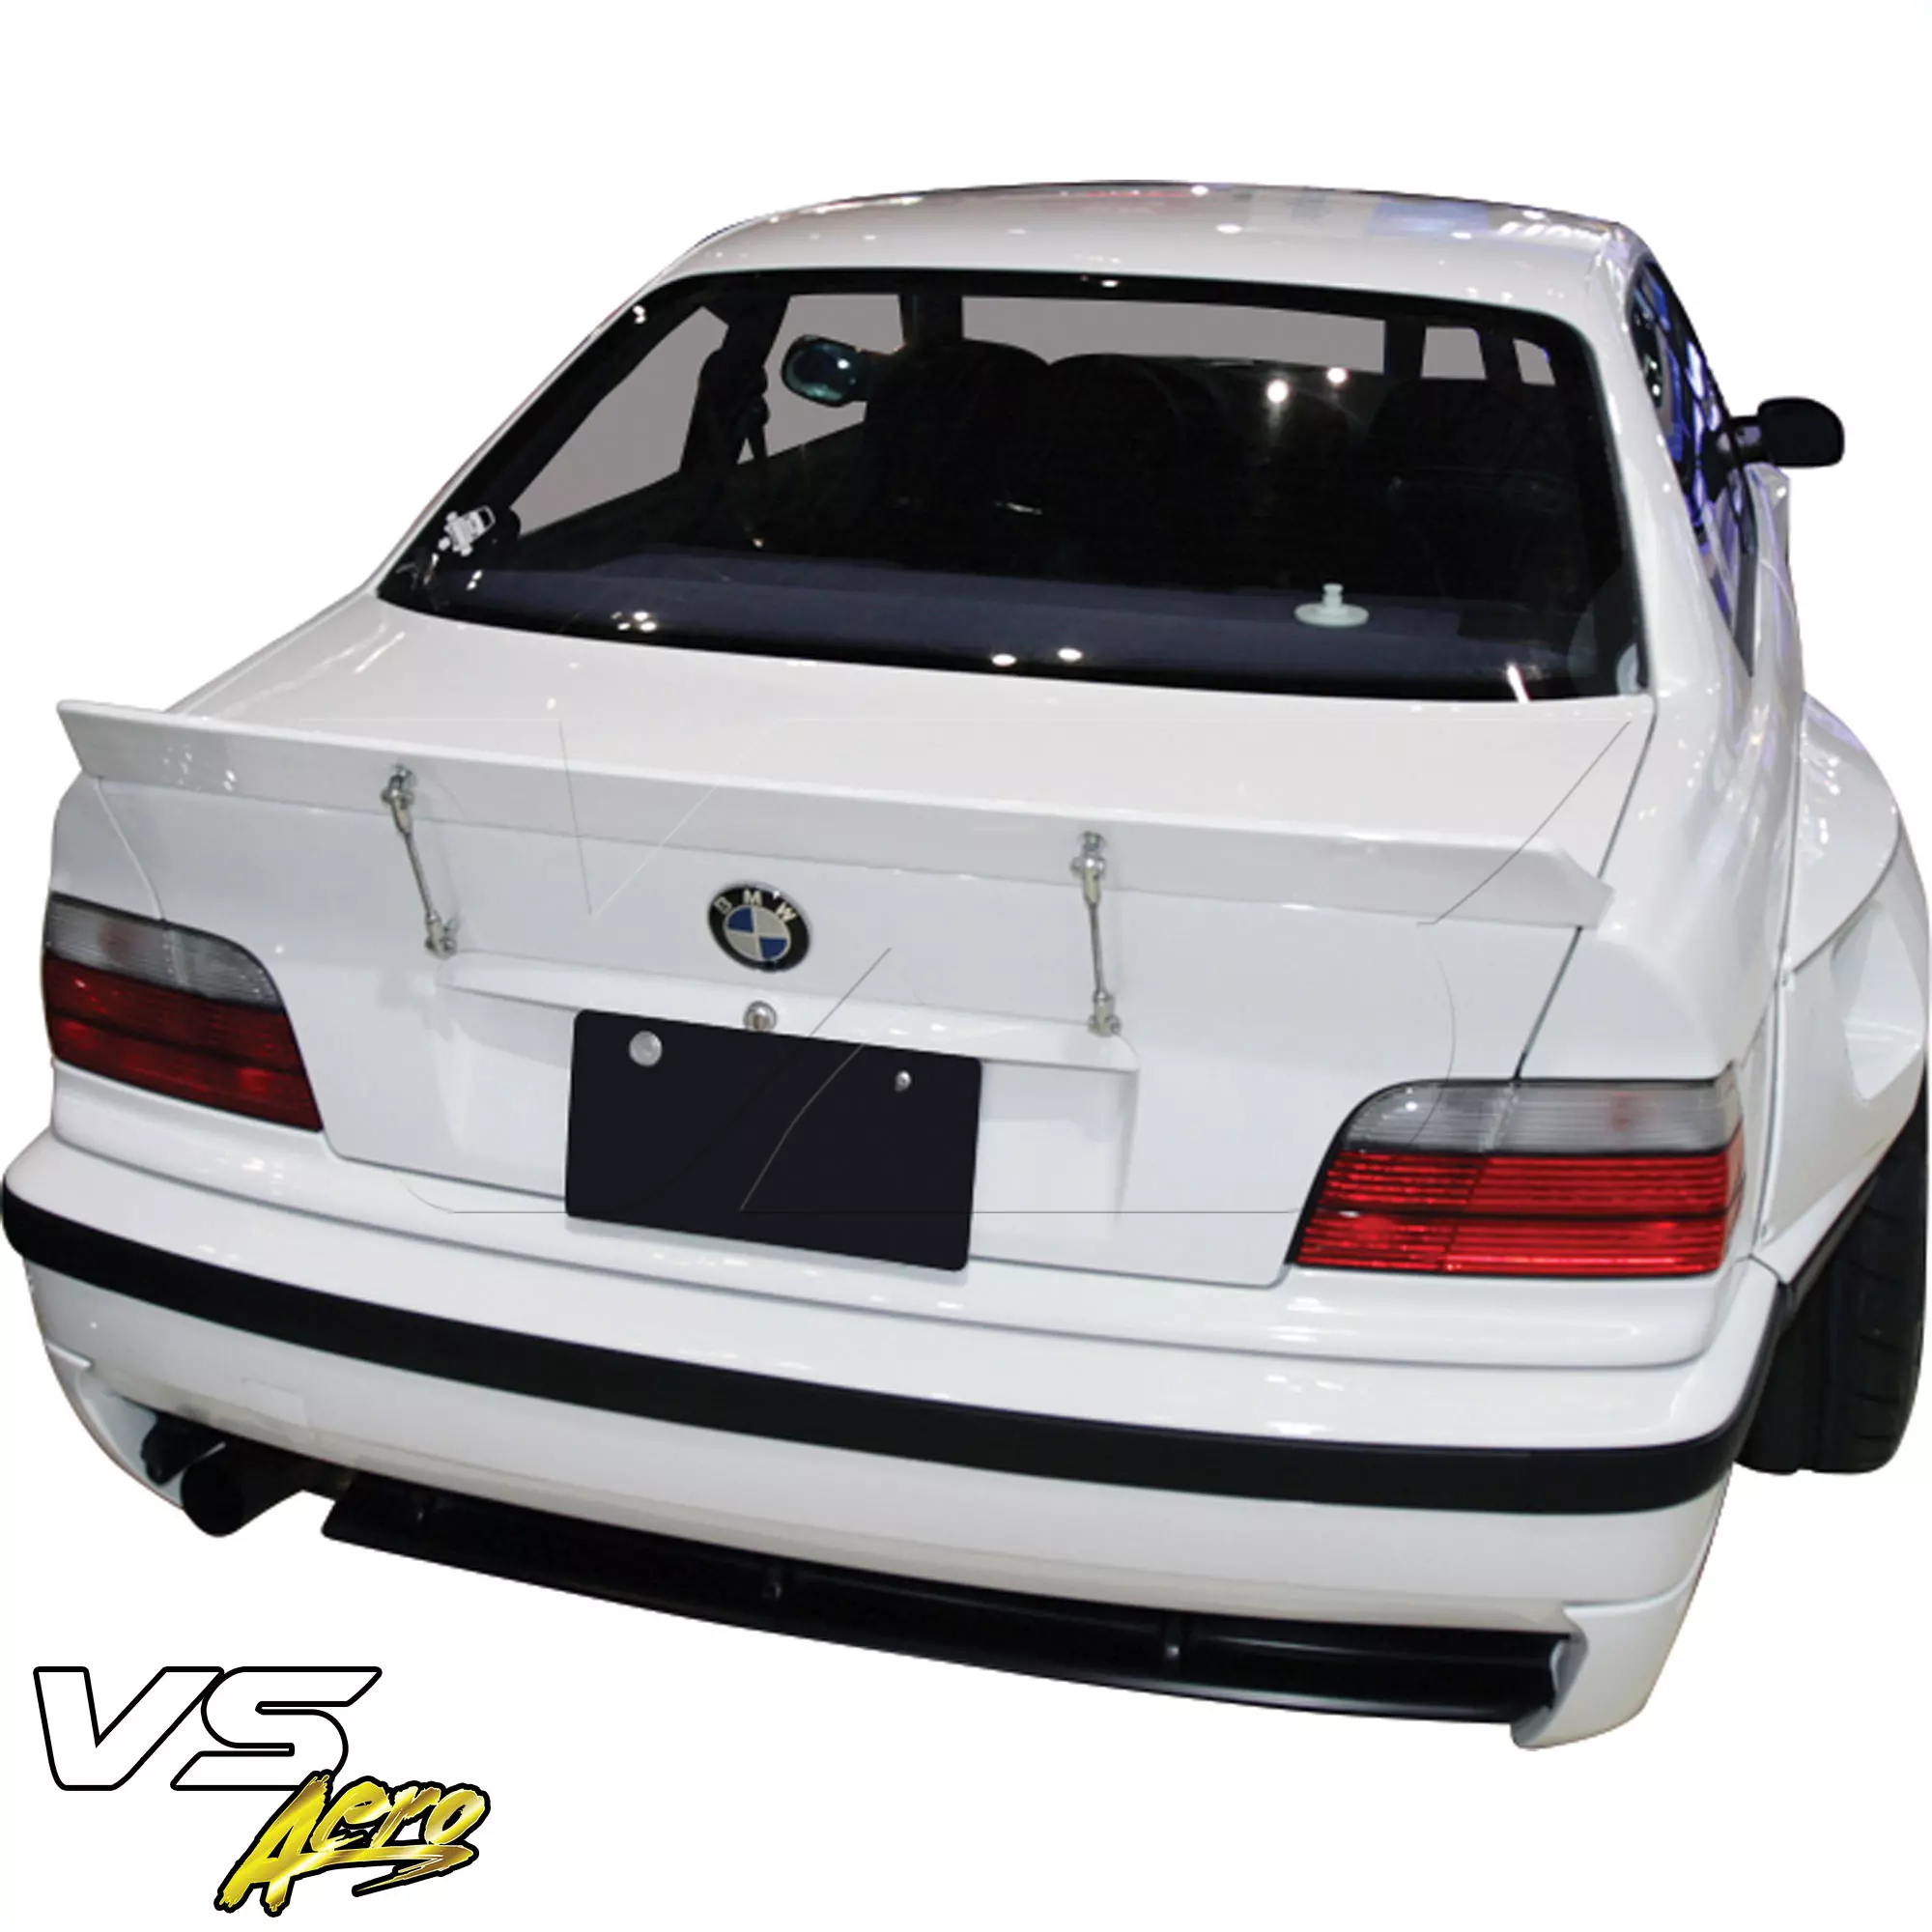 VSaero FRP TKYO Wide Body Kit 12pc w Wing > BMW 3-Series 325i 328i E36 1992-1998 > 2dr Coupe - Image 95